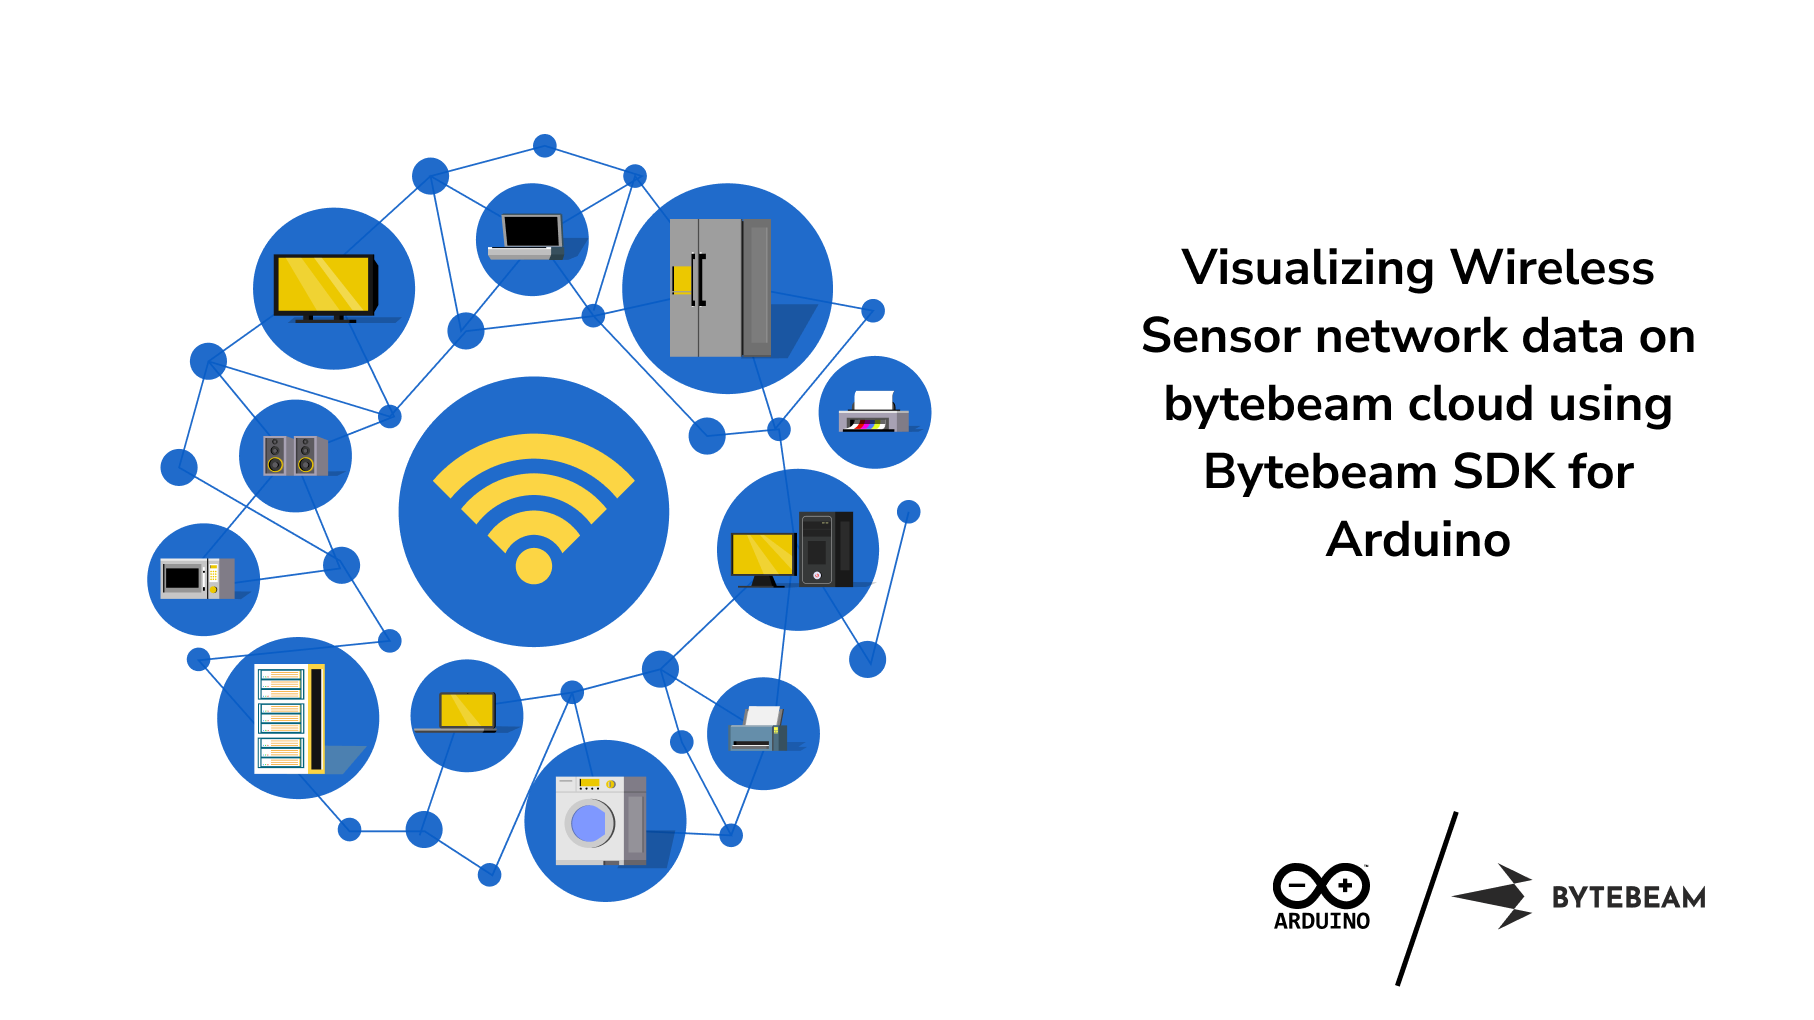 Visualizing Wireless Sensor network data on bytebeam cloud using Bytebeam SDK for Arduino